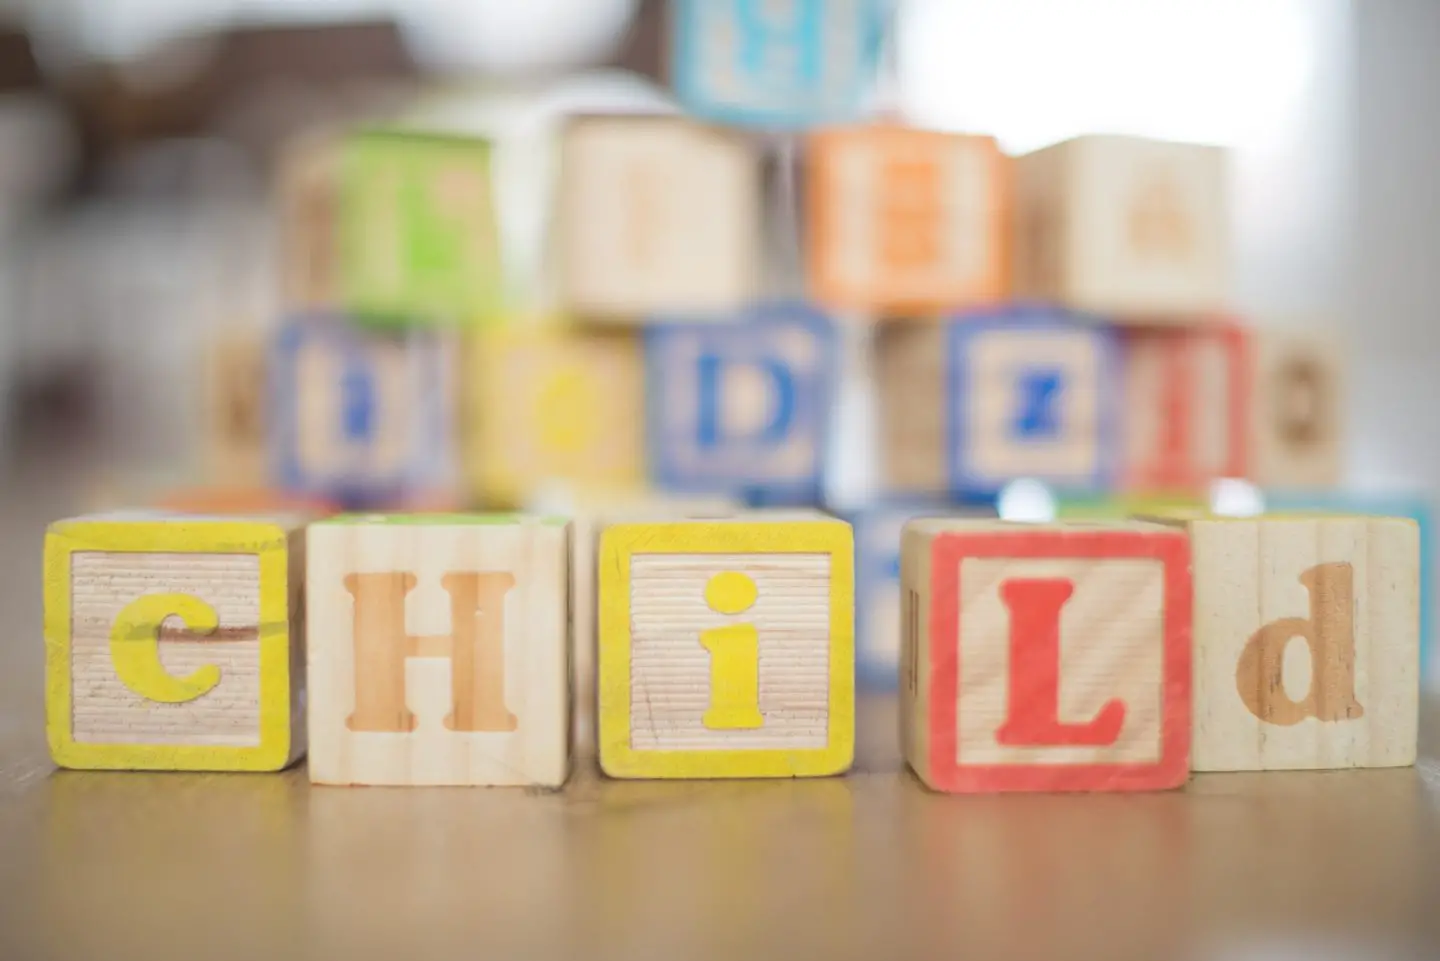 Wooden children's building blocks spelling out "child"